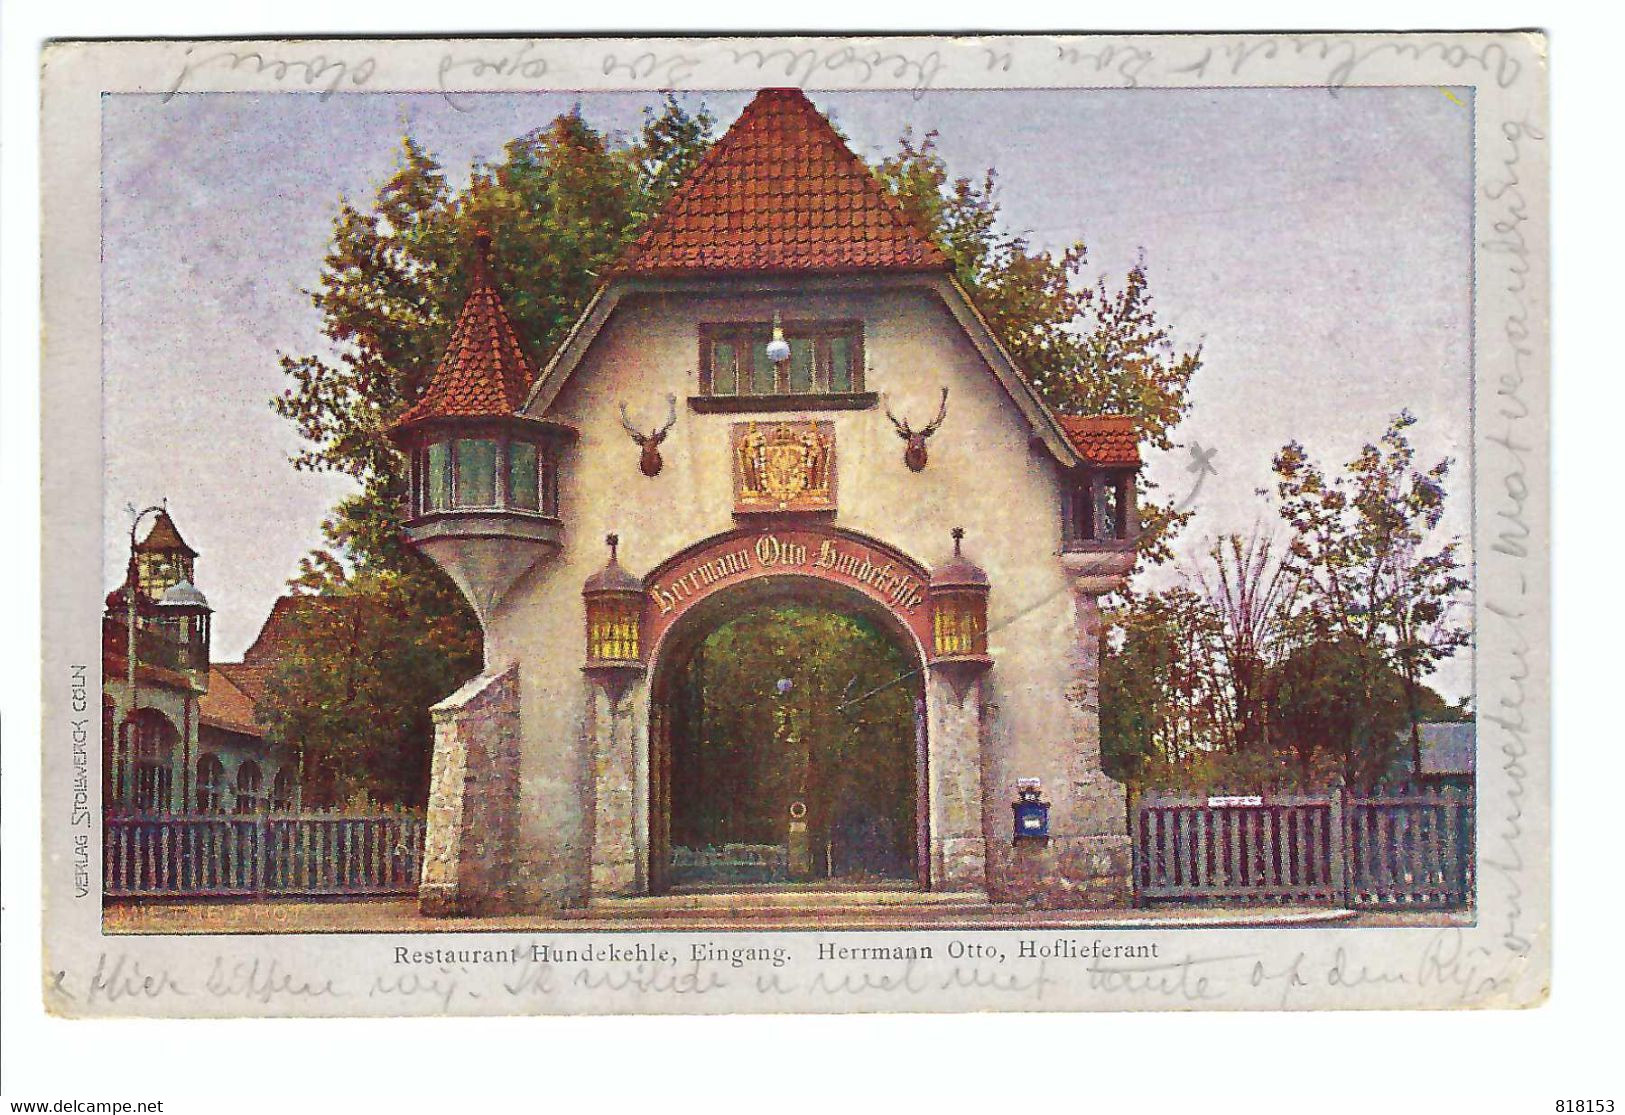 Restaurant Hundekehle, Eingang.  Hermann Otto , Hoflieferant  1907 - Grunewald